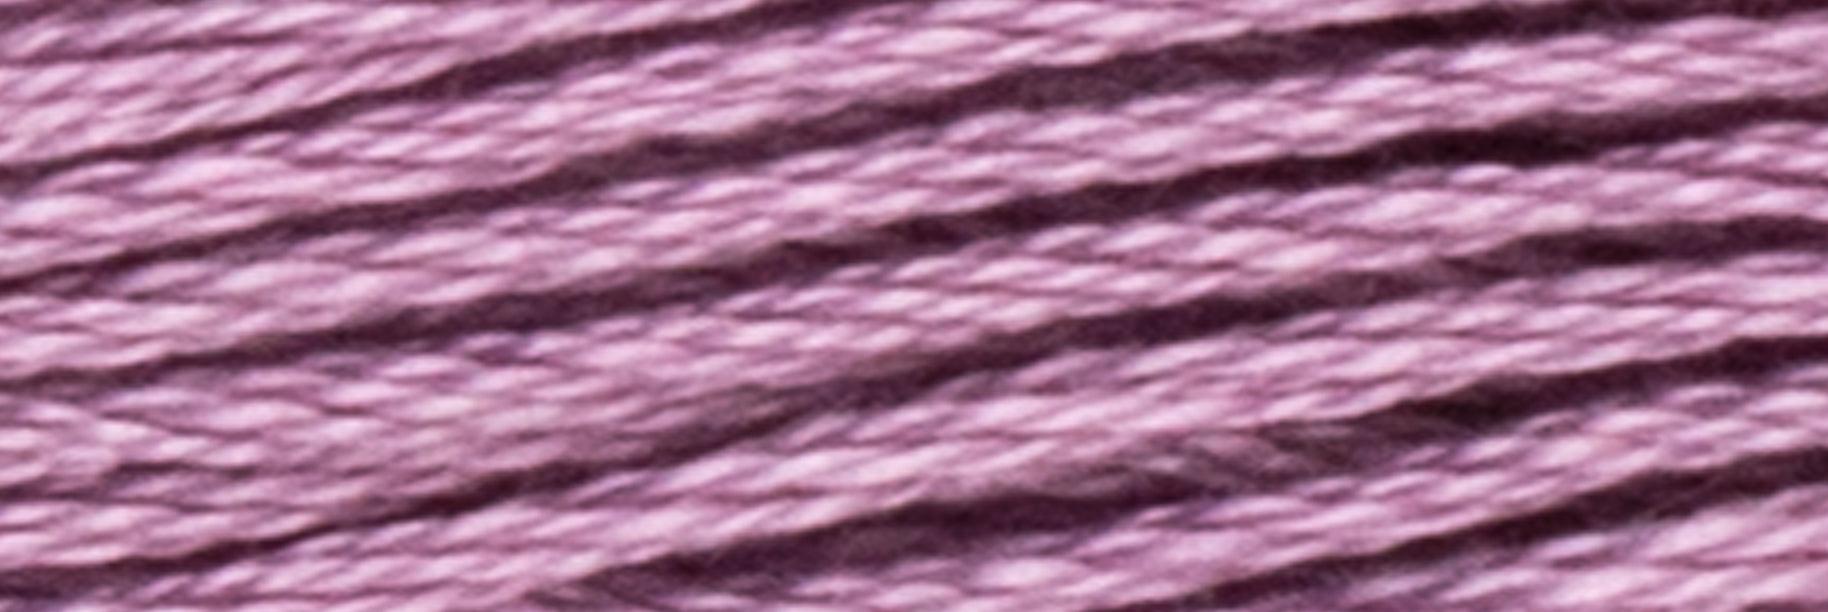 Stranded Cotton Luca-S - 105 / DMC 3836 / Anchor 90 - Luca-S Stranded Cotton